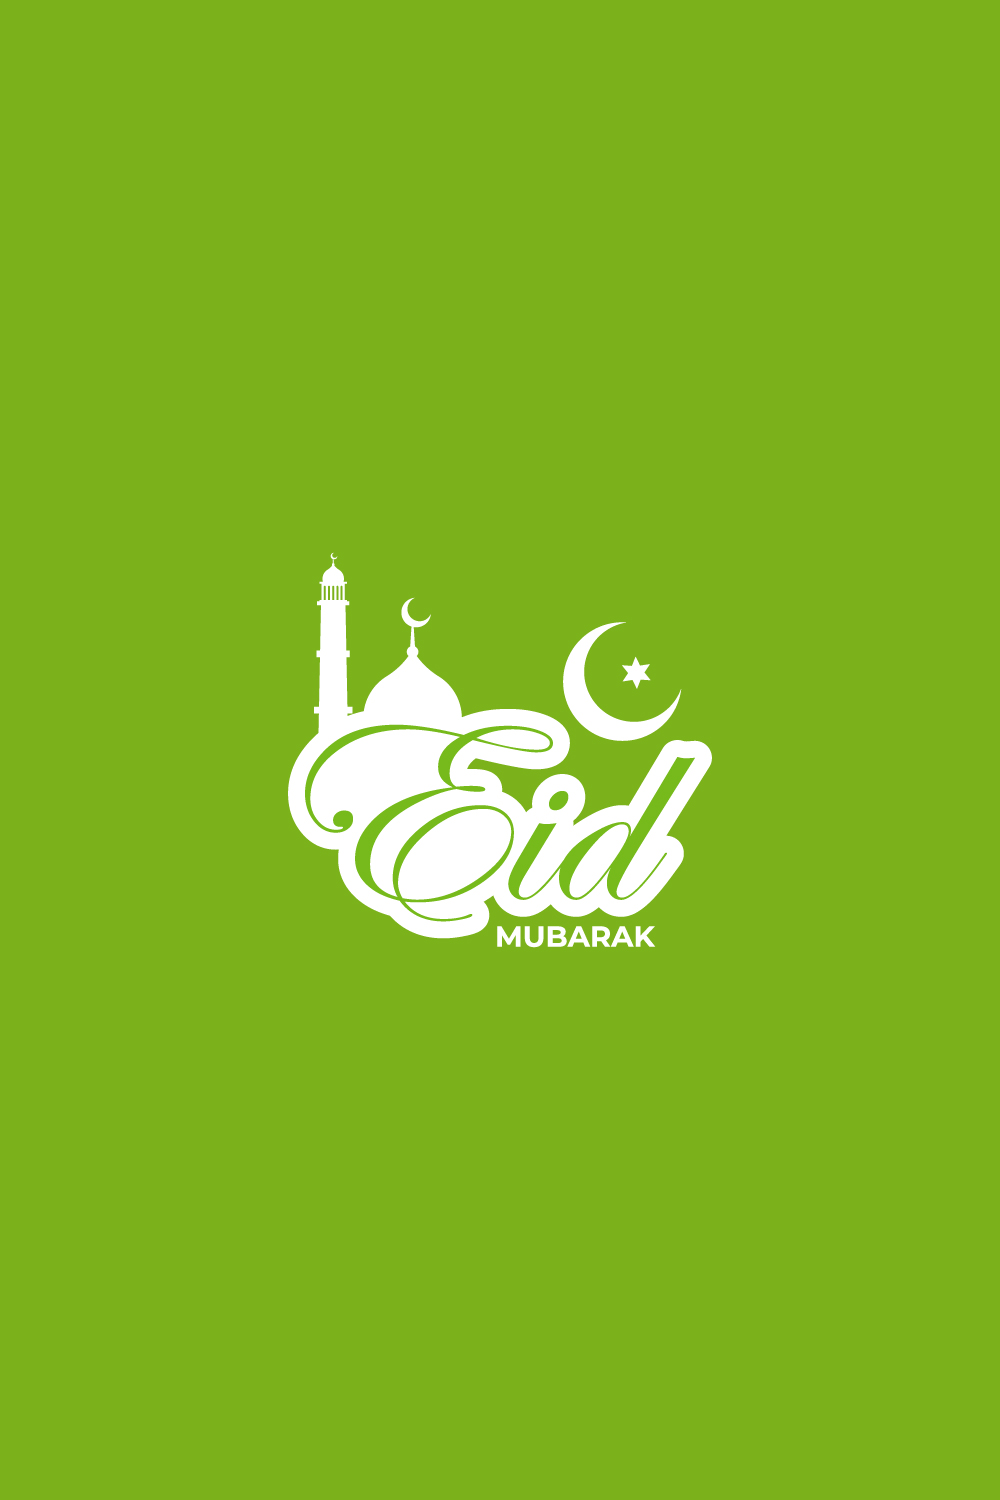 Eid Ul Adha Mubarak Media Post Design, Islamic festival background design pinterest preview image.